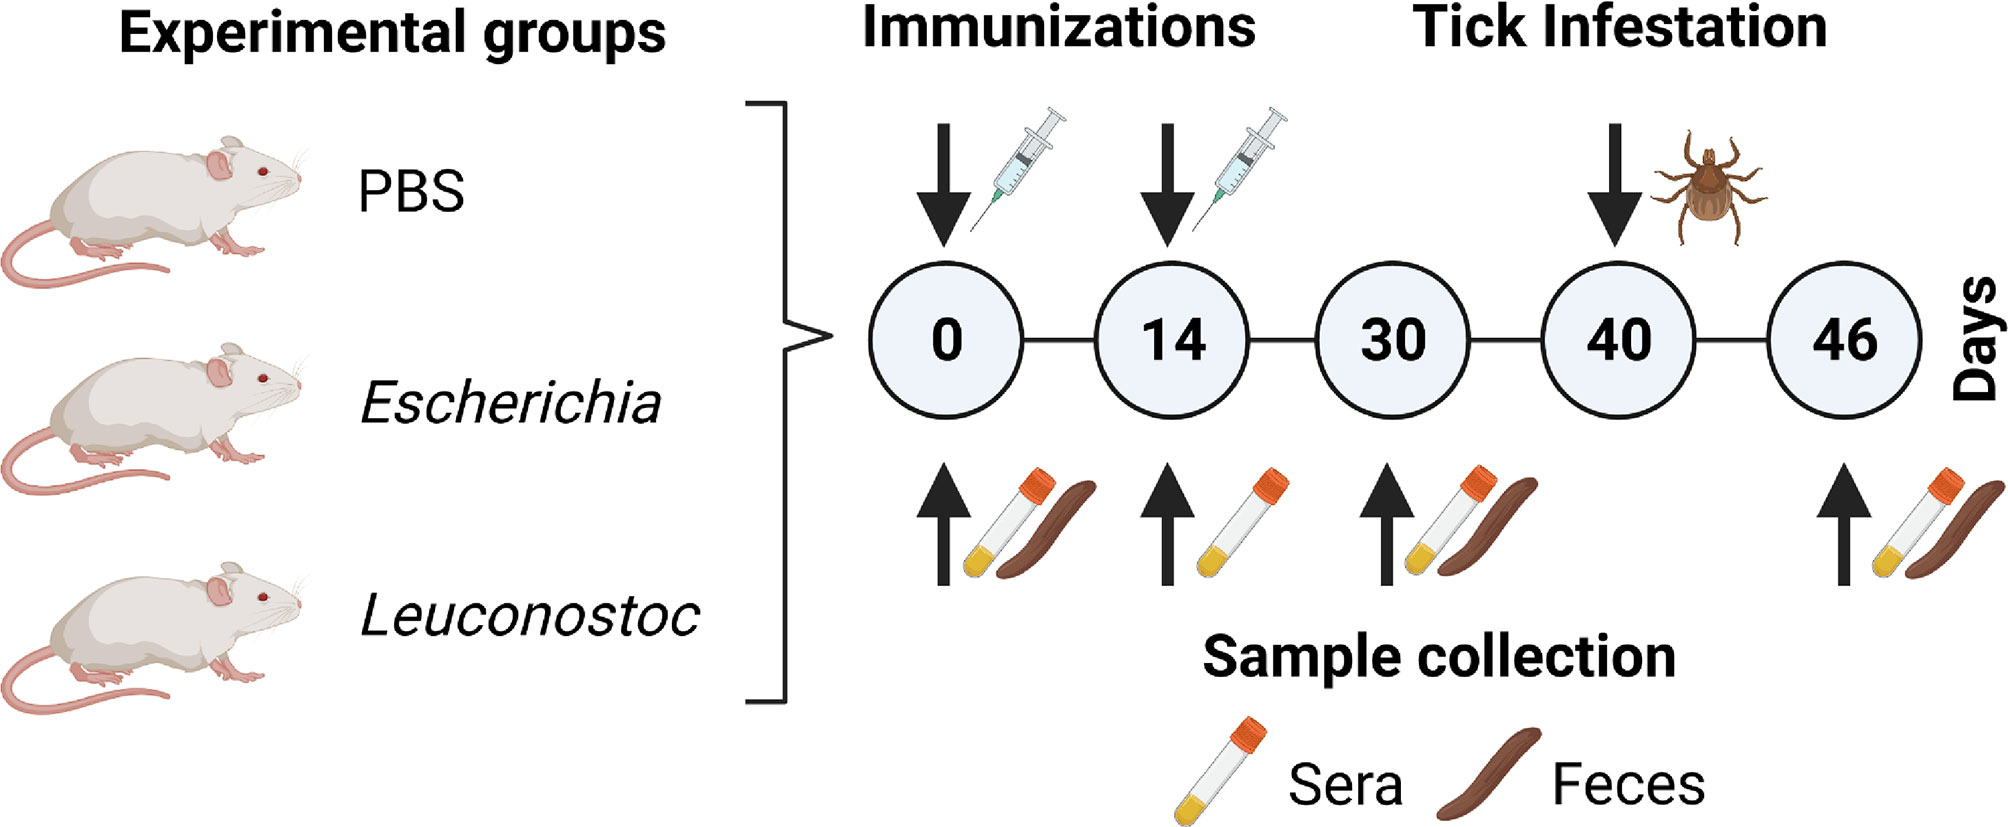 Frontiers | Anti-Microbiota Vaccines Modulate the Tick Microbiome 